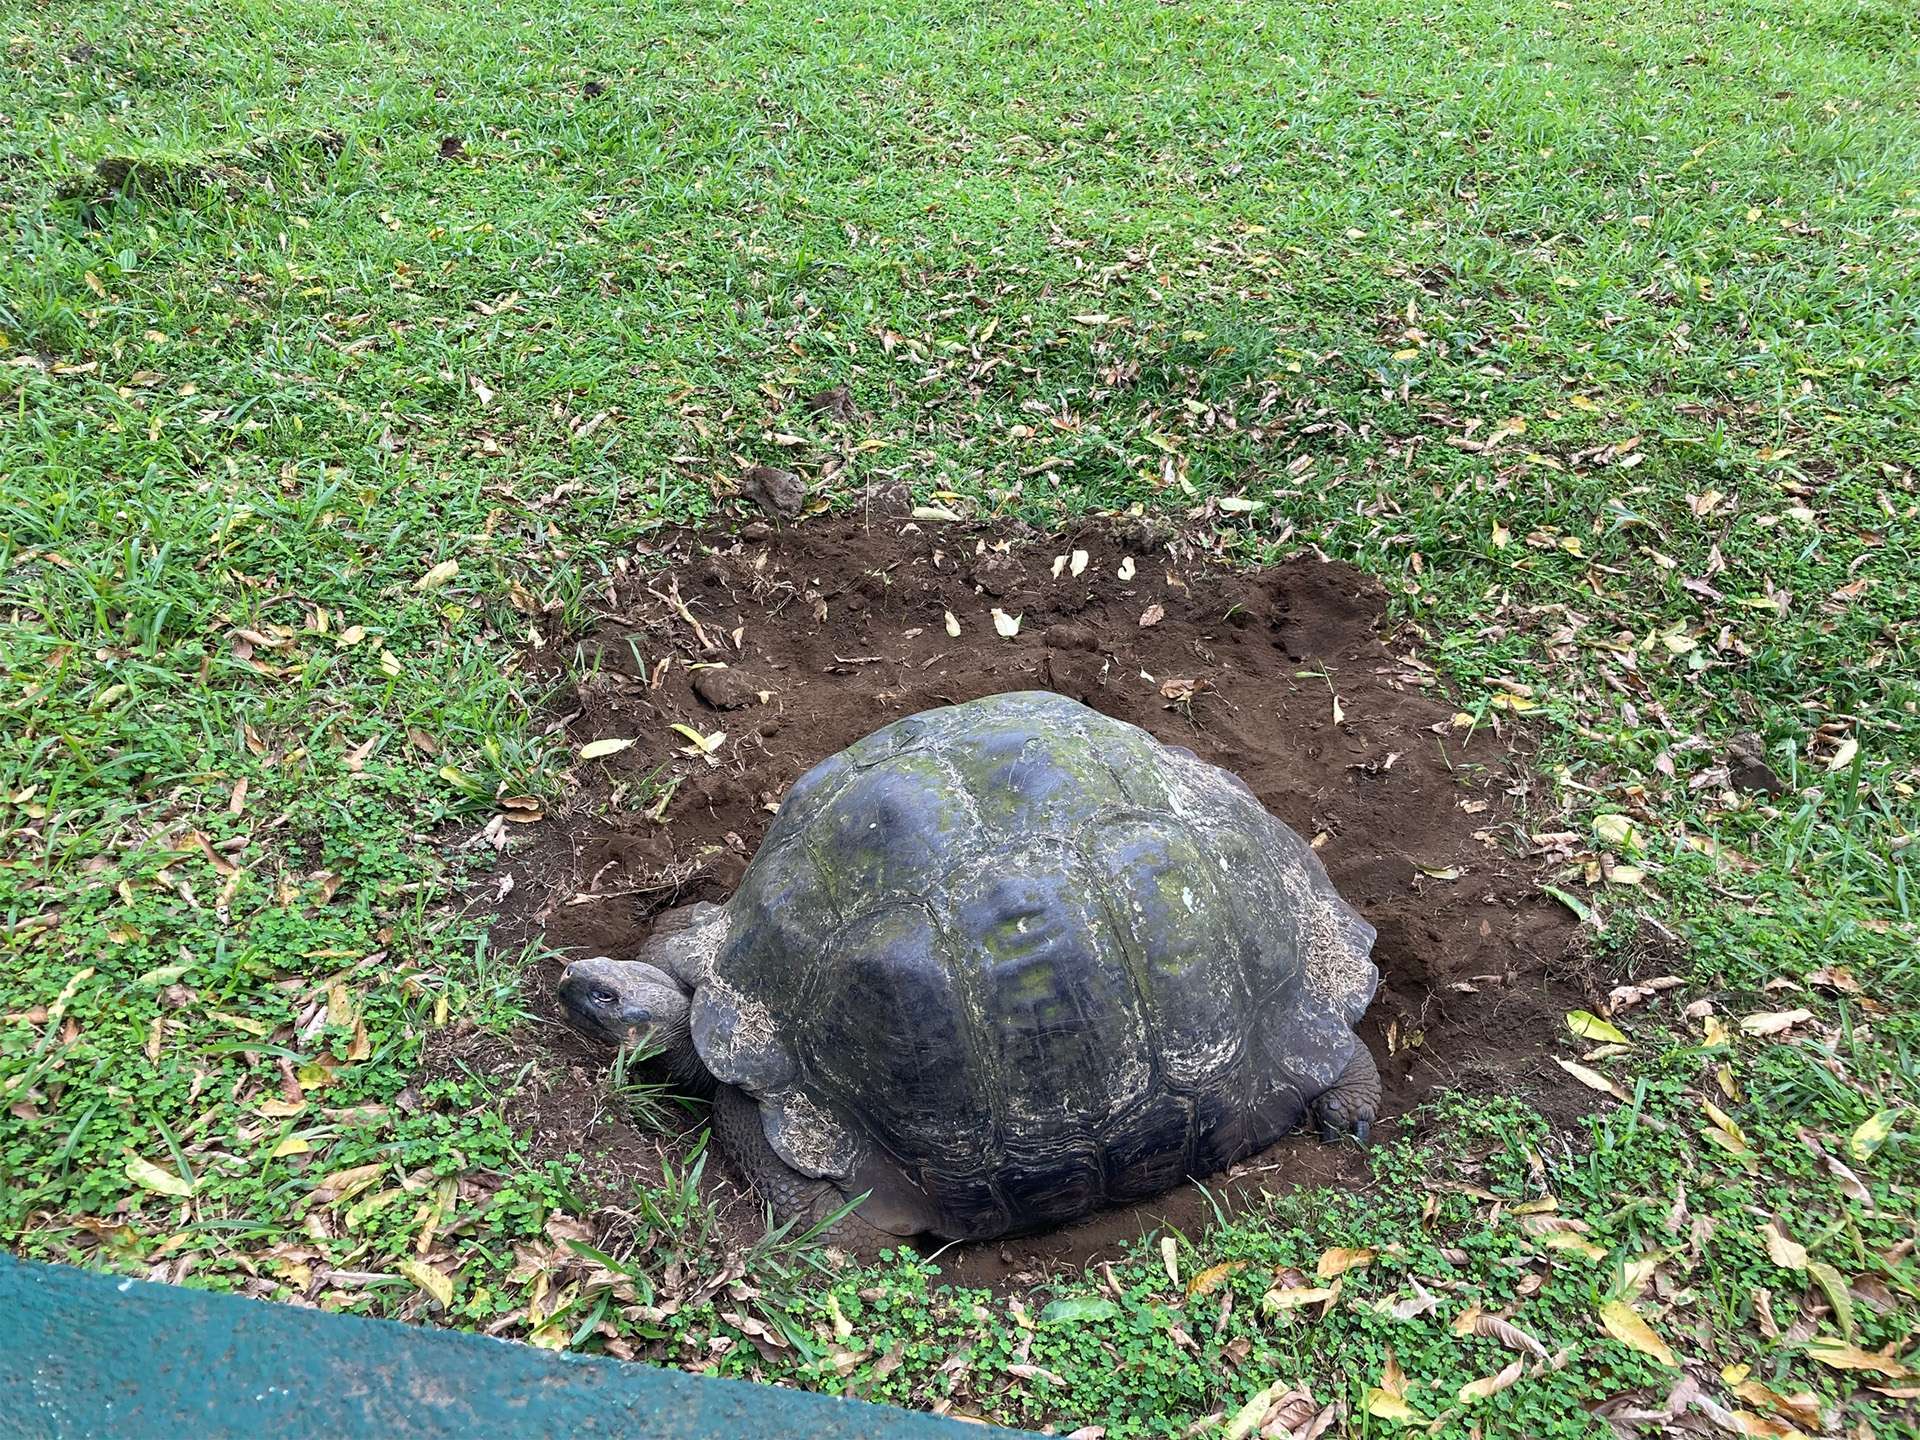 Tortoise in burrow it dug tortoise camp in the Galapagos